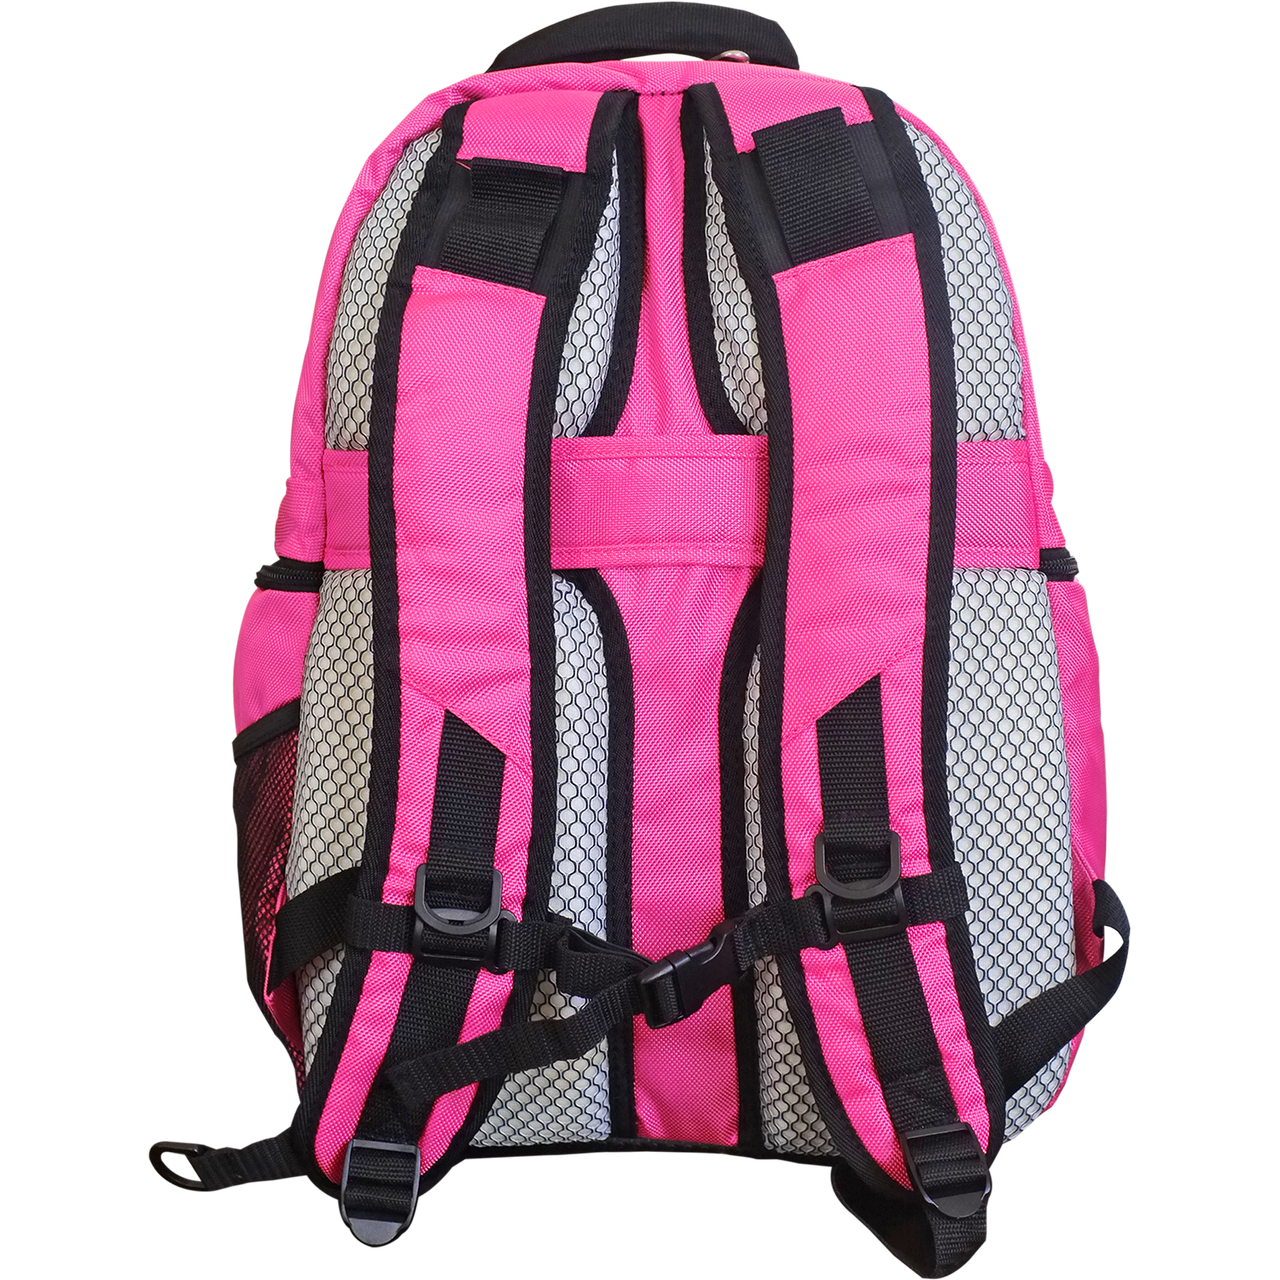 Detroit Tigers Laptop Backpack Pink